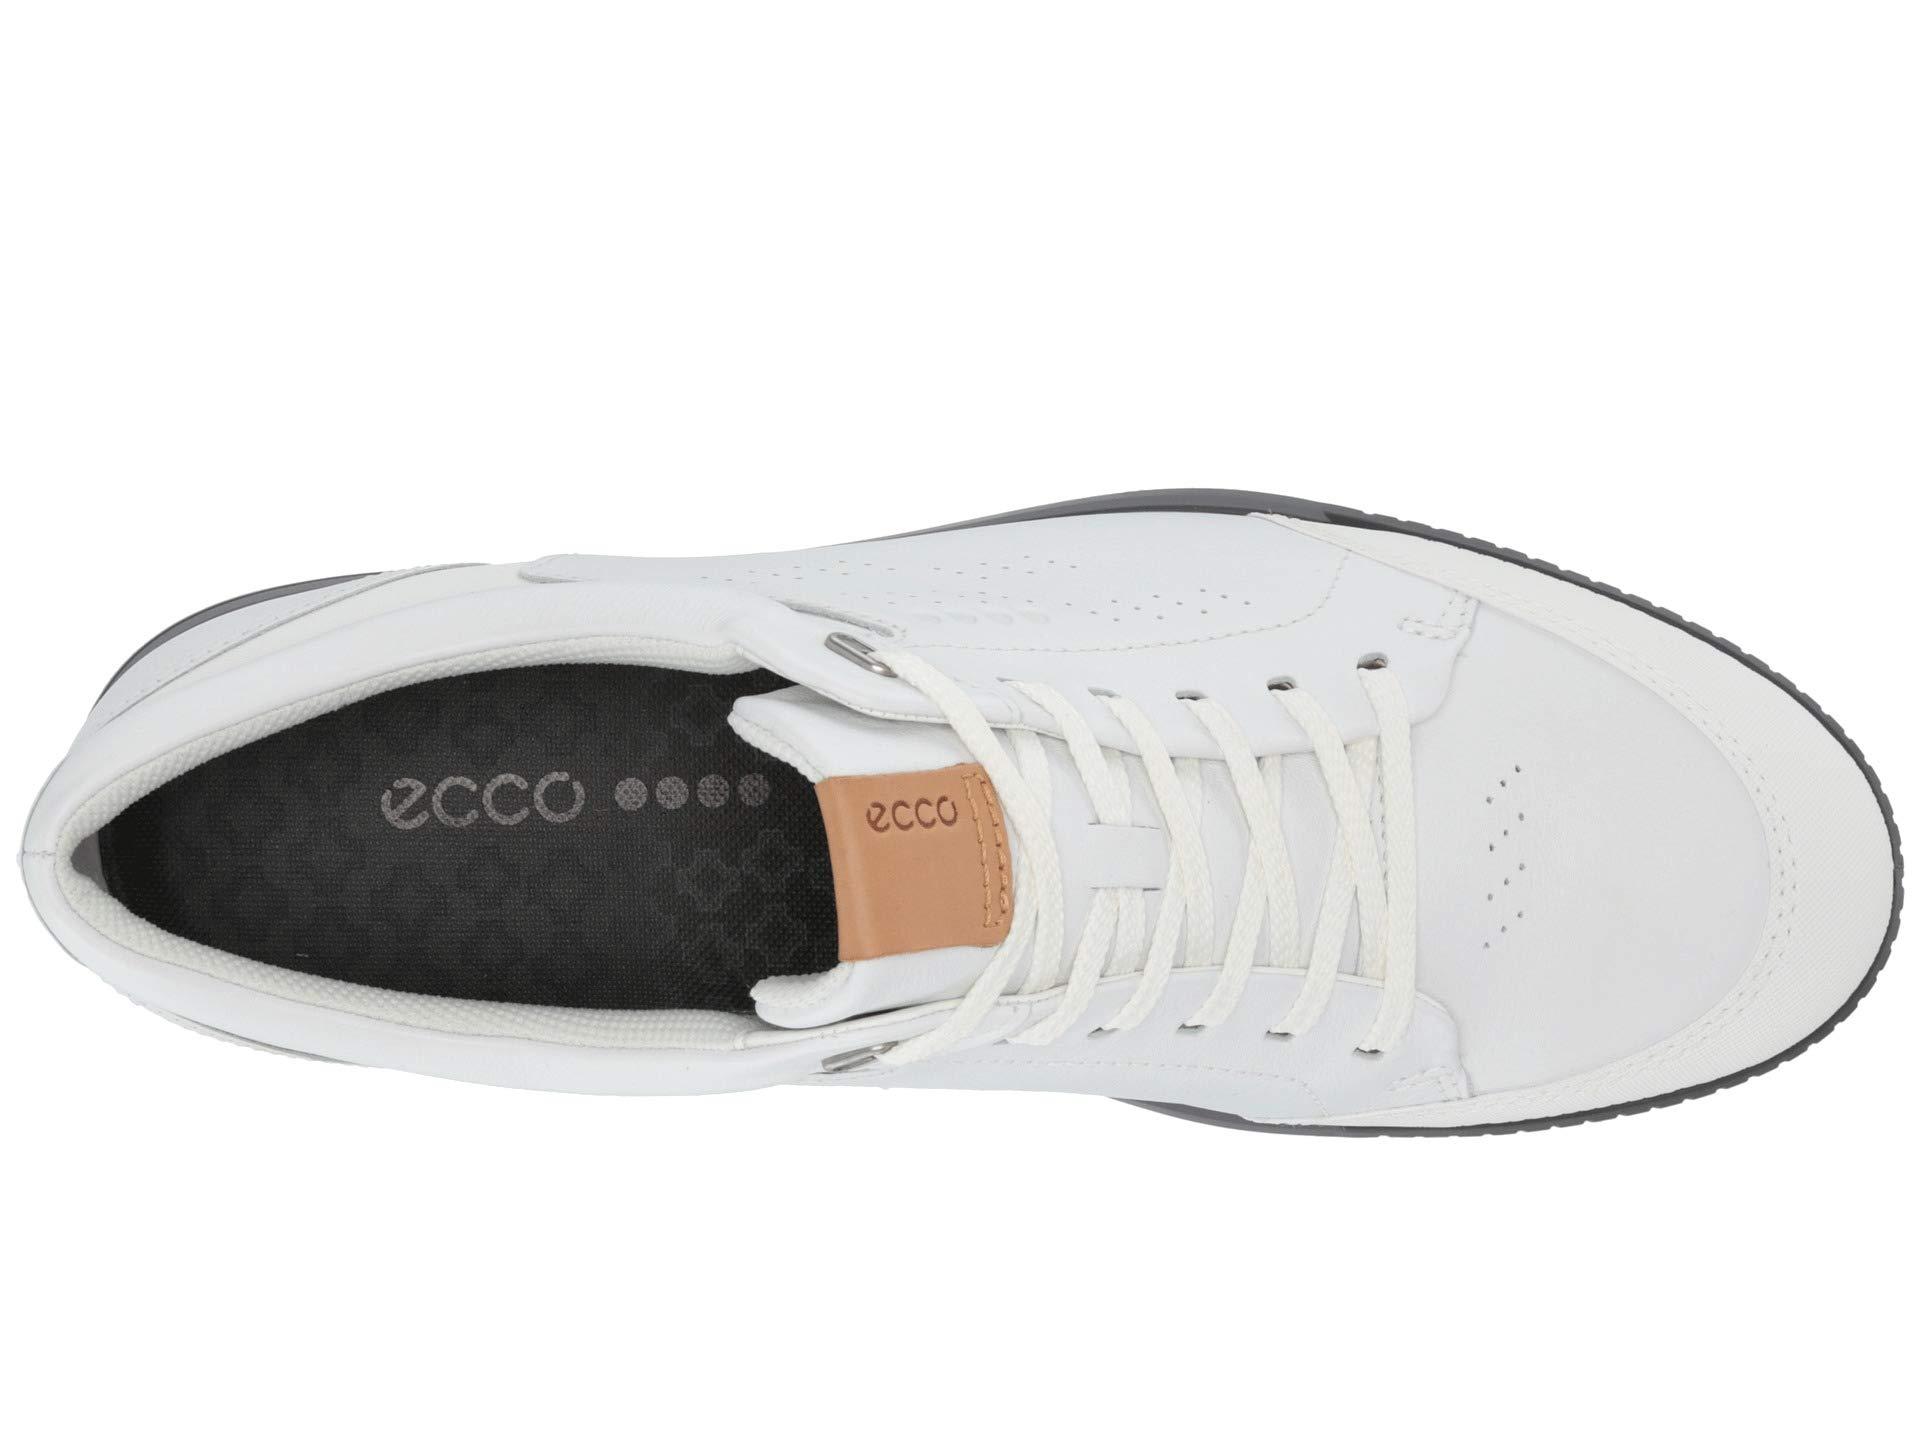 Ecco Leather Street Retro Lx (black) Men's Golf Shoes for Men | Lyst